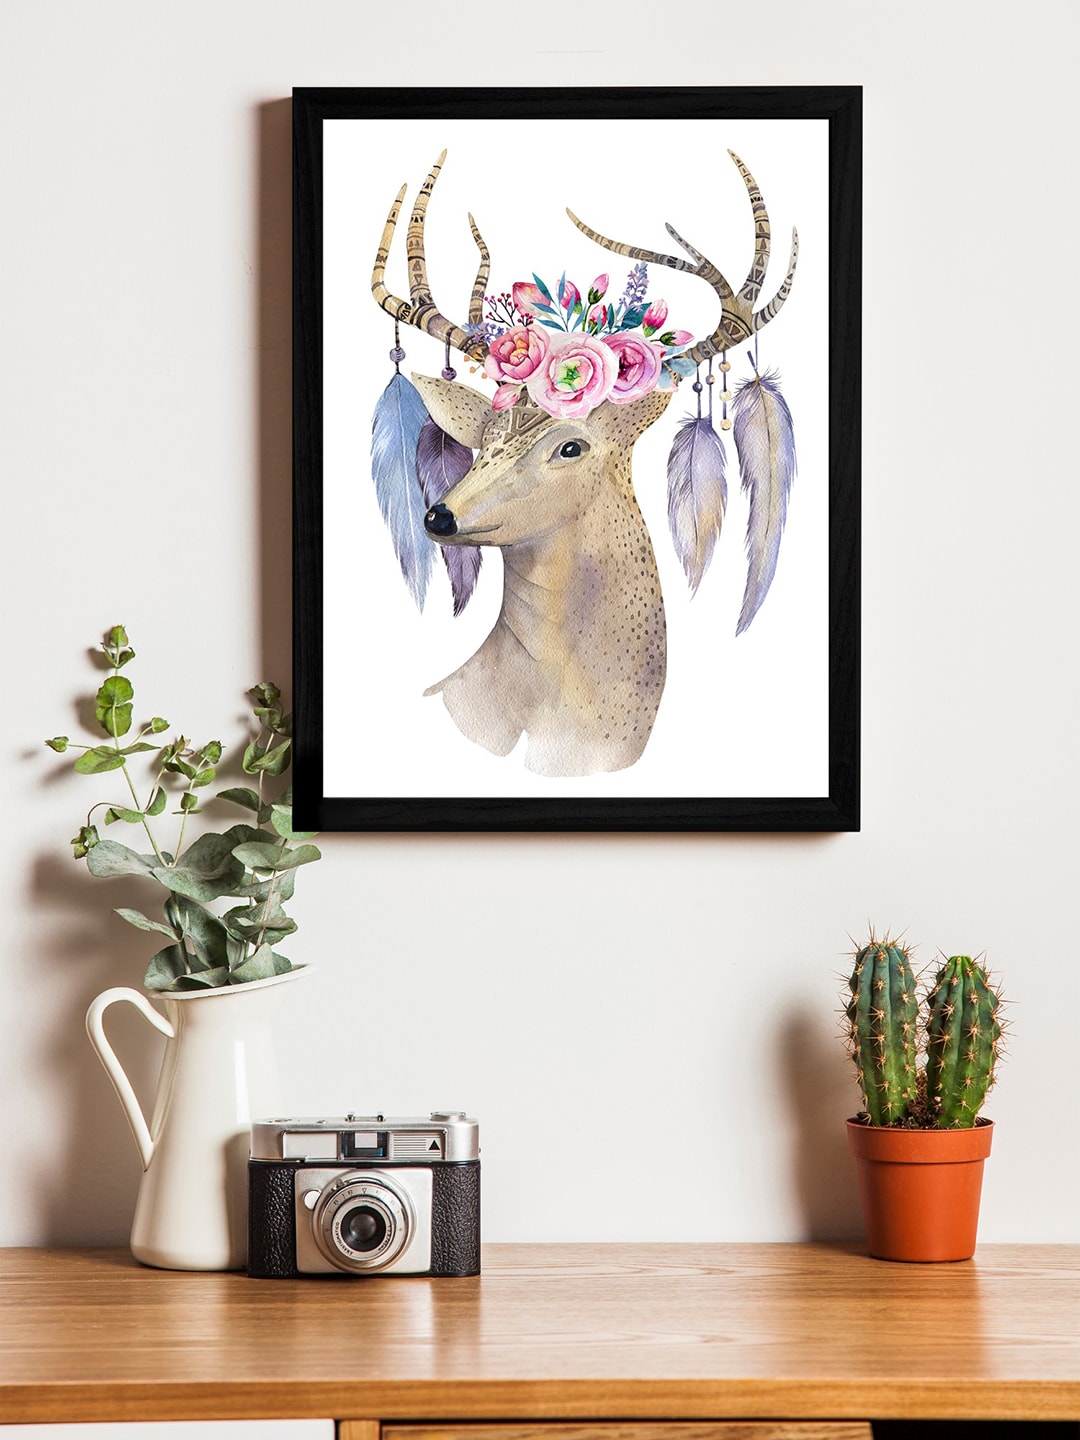 Art Street Brown & White Deer With Flower Crown Wall Art Price in India